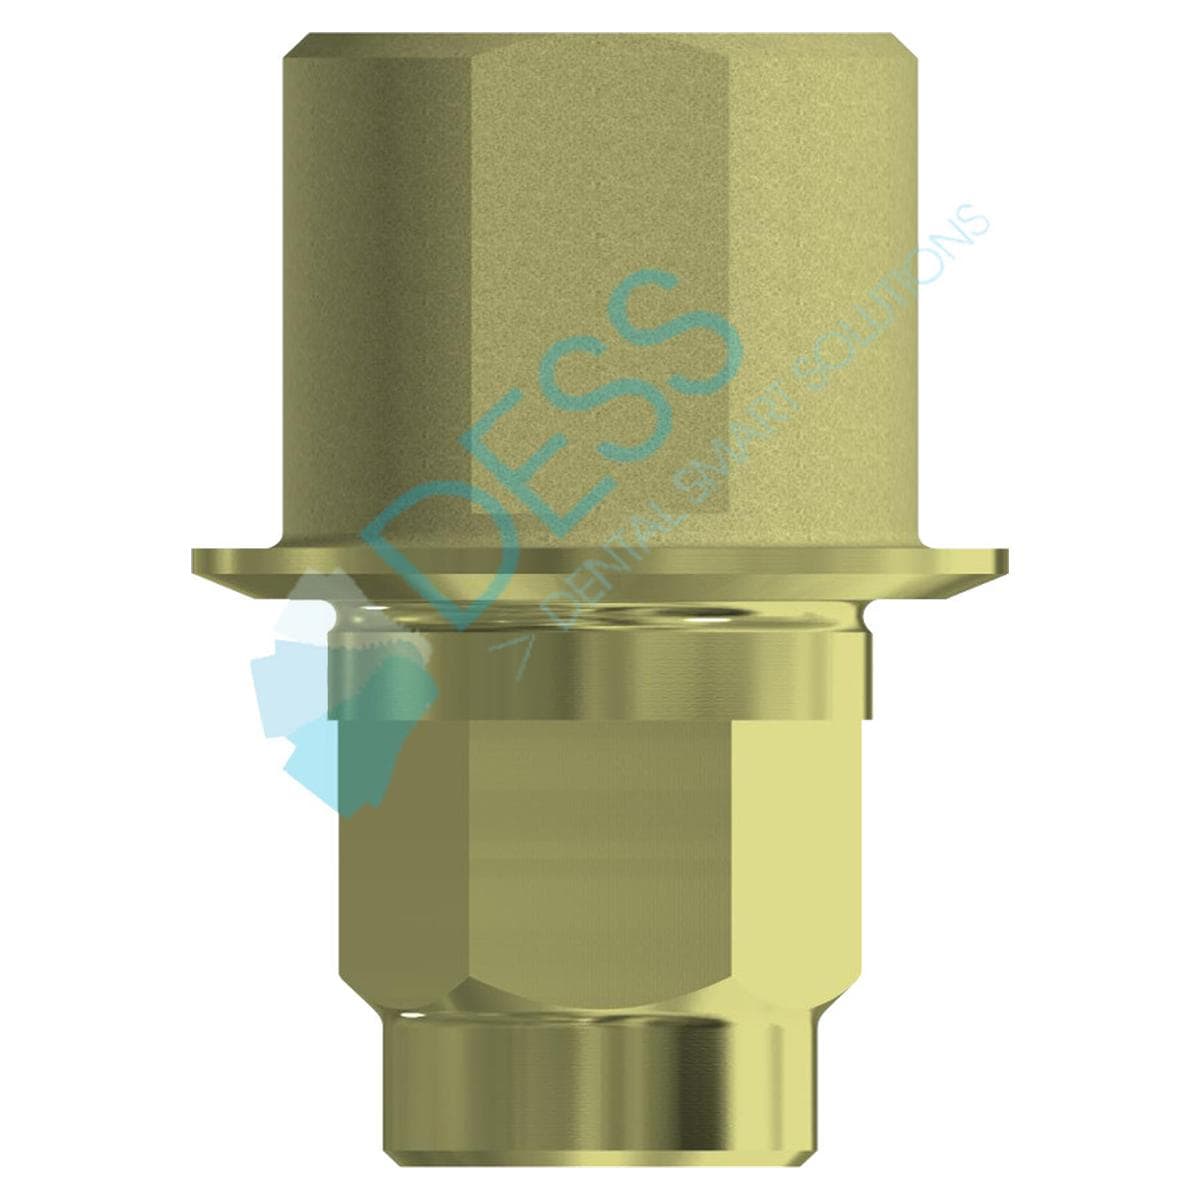 Titanbase DESS AURUMBase® - kompatibel mit Dentsply Friadent® Xive® - RP Ø 3,8 mm, mit Rotationsschutz